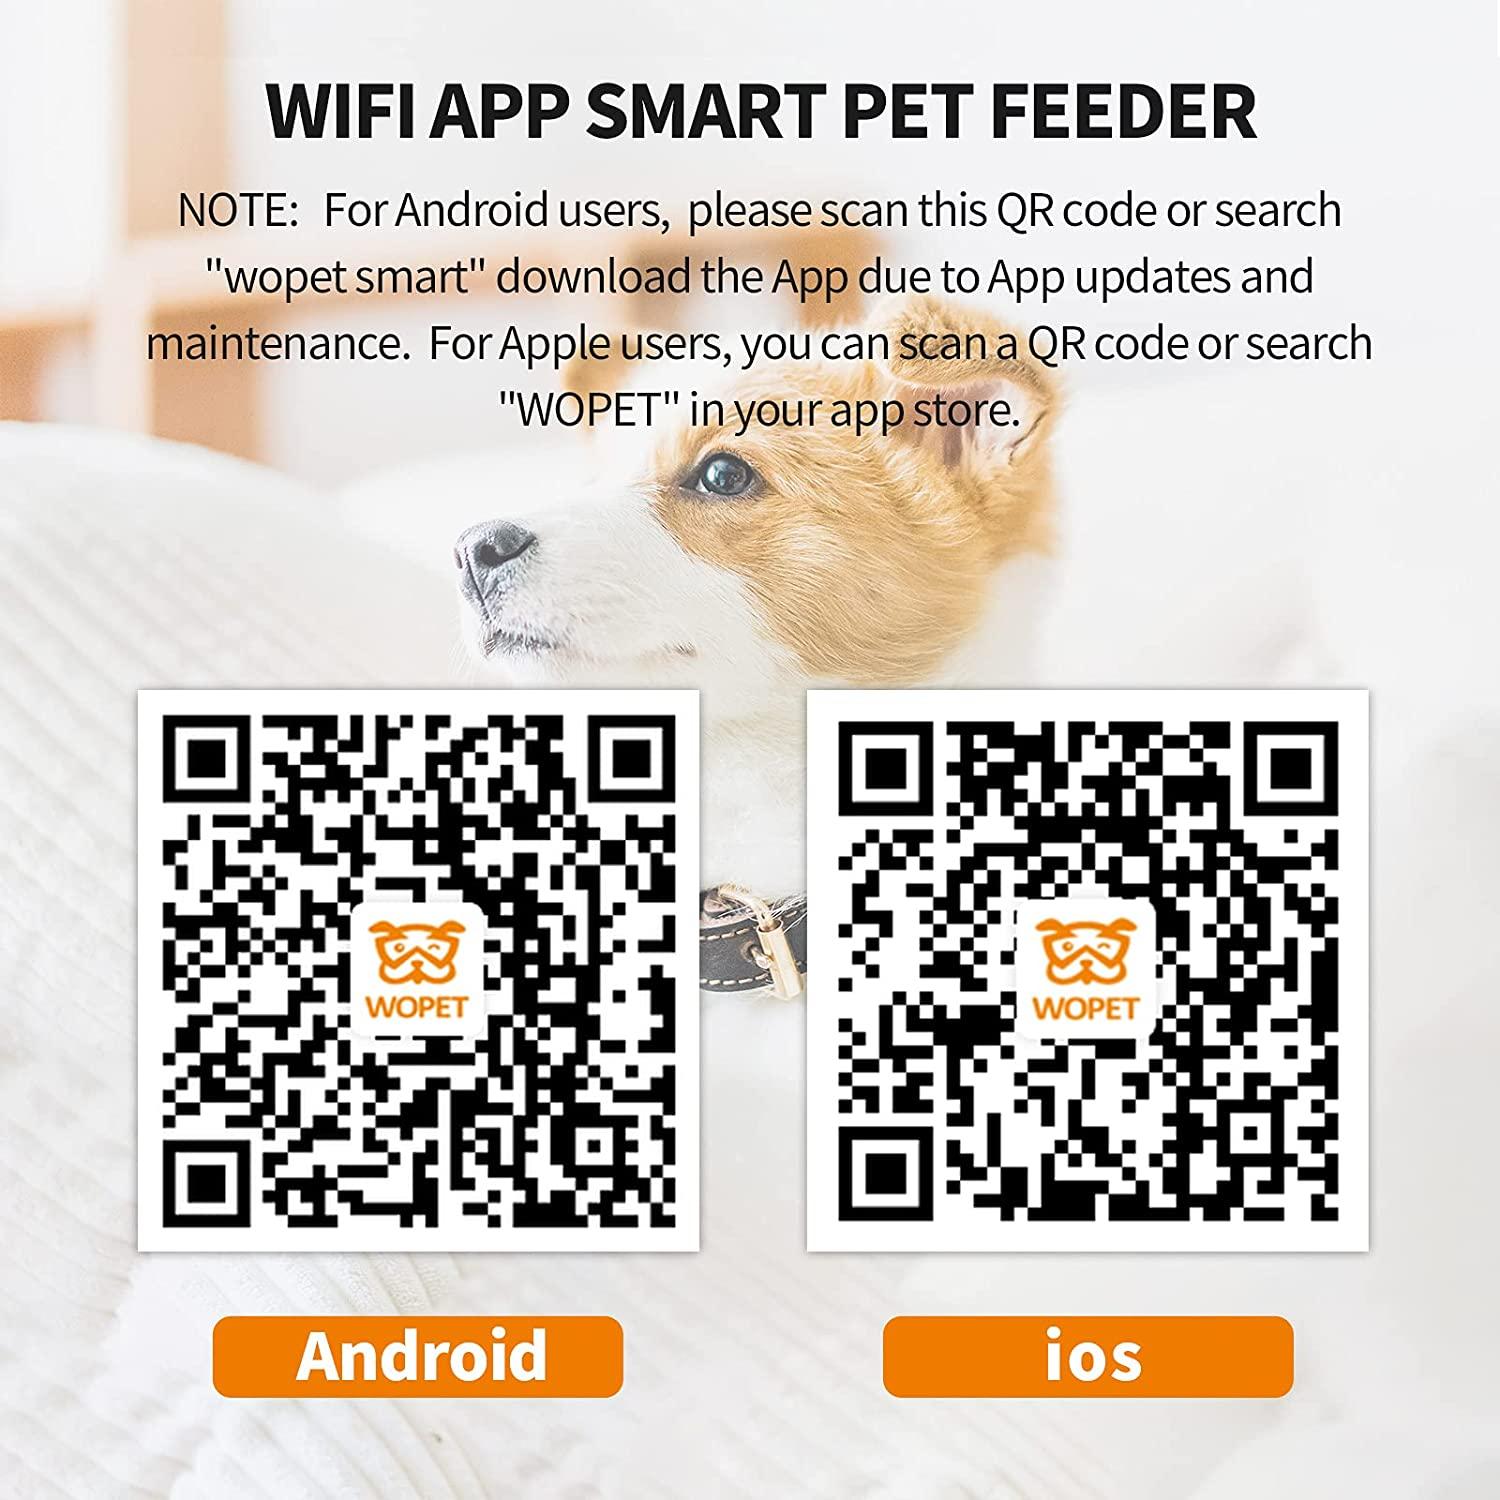 Wopet Smart Pet Camera, Dog Treat Dispenser, Full HD WiFi Pet Camera with Night Vision